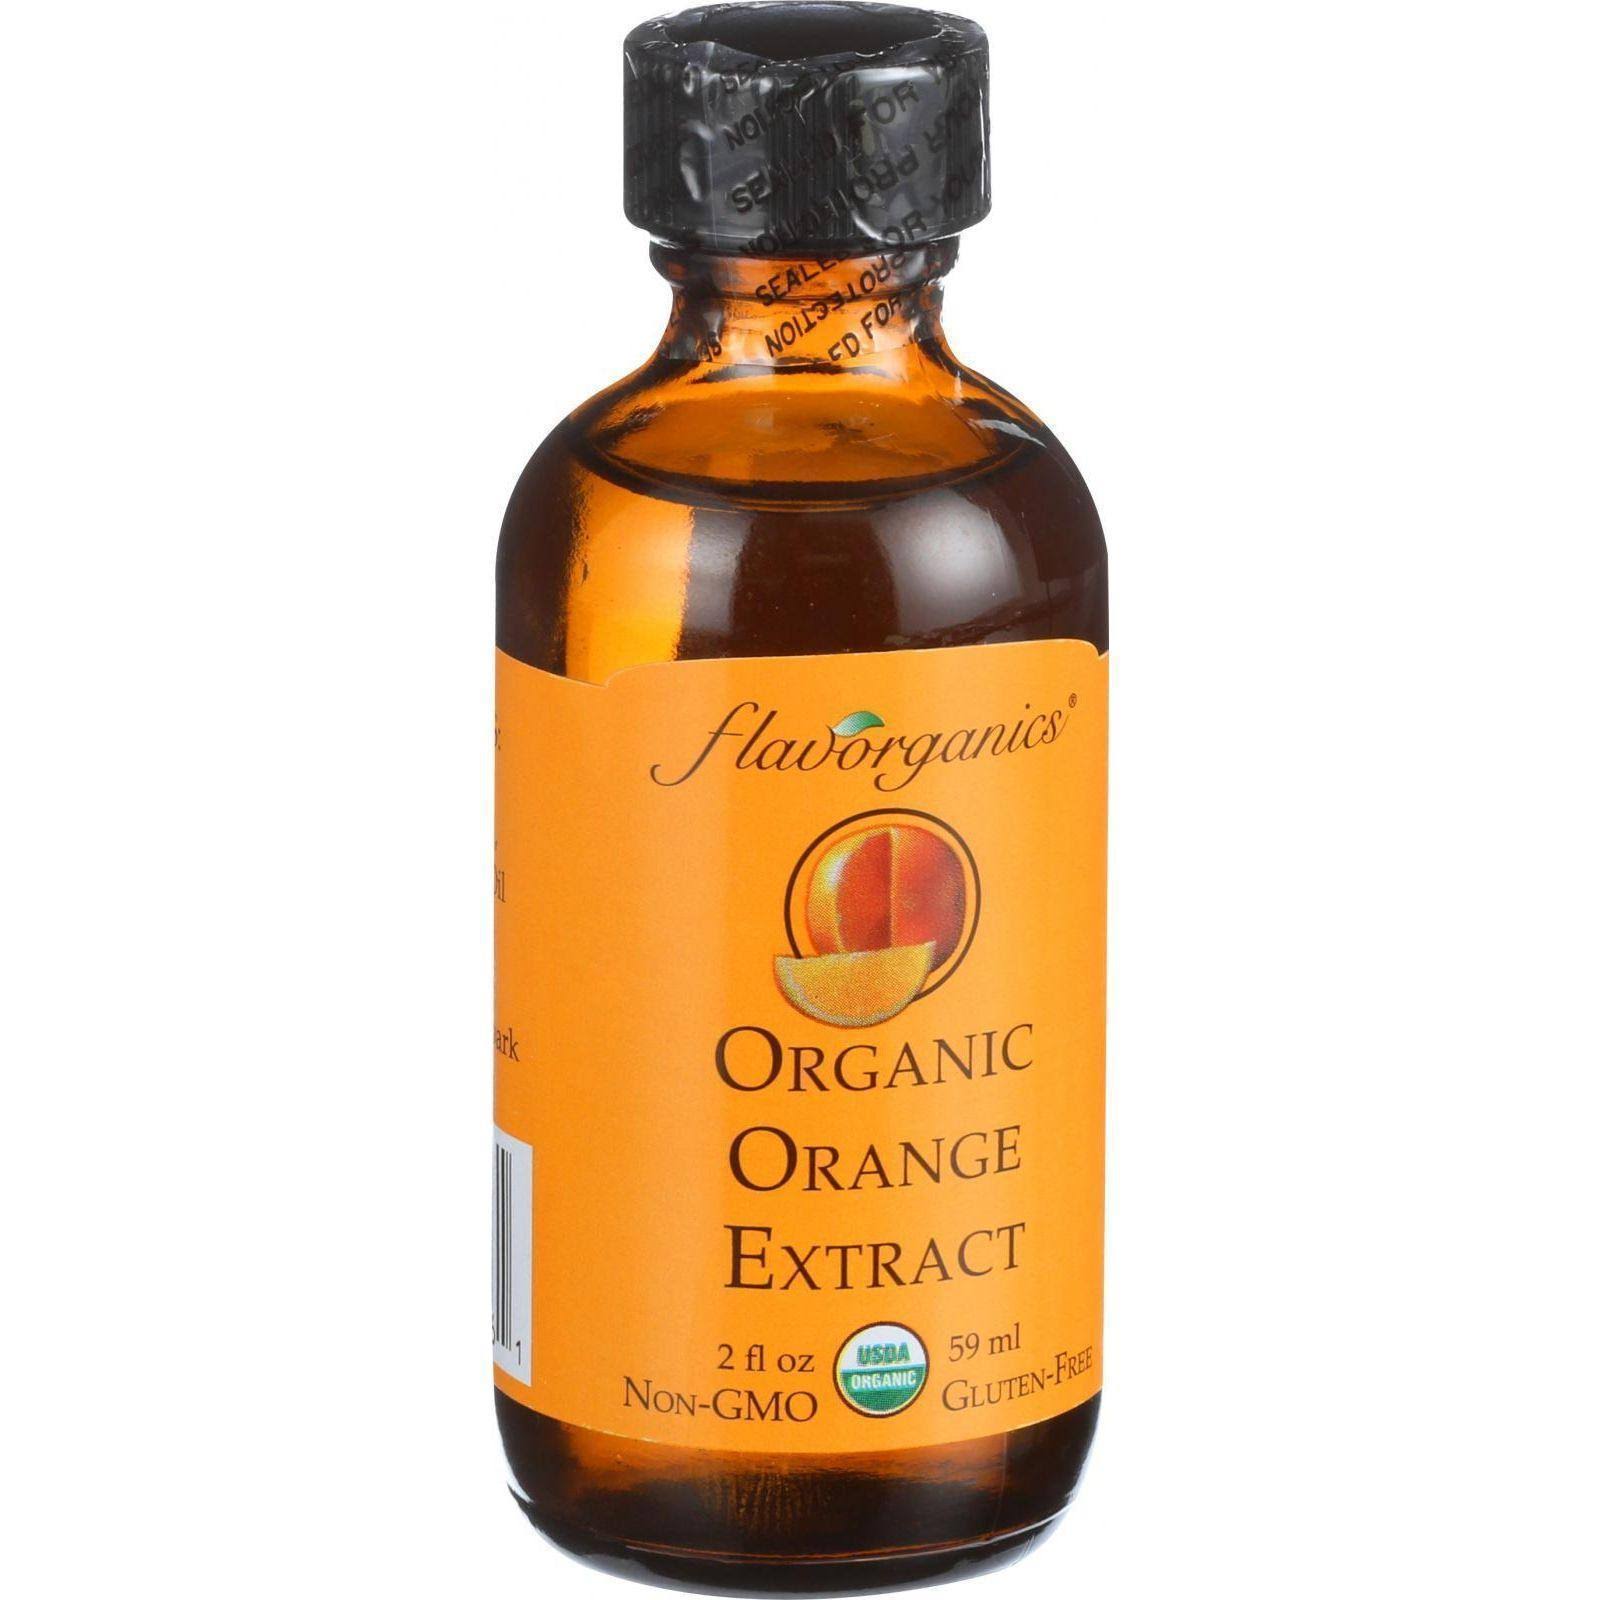 Flavorganics Organic Extract - 59ml, Orange